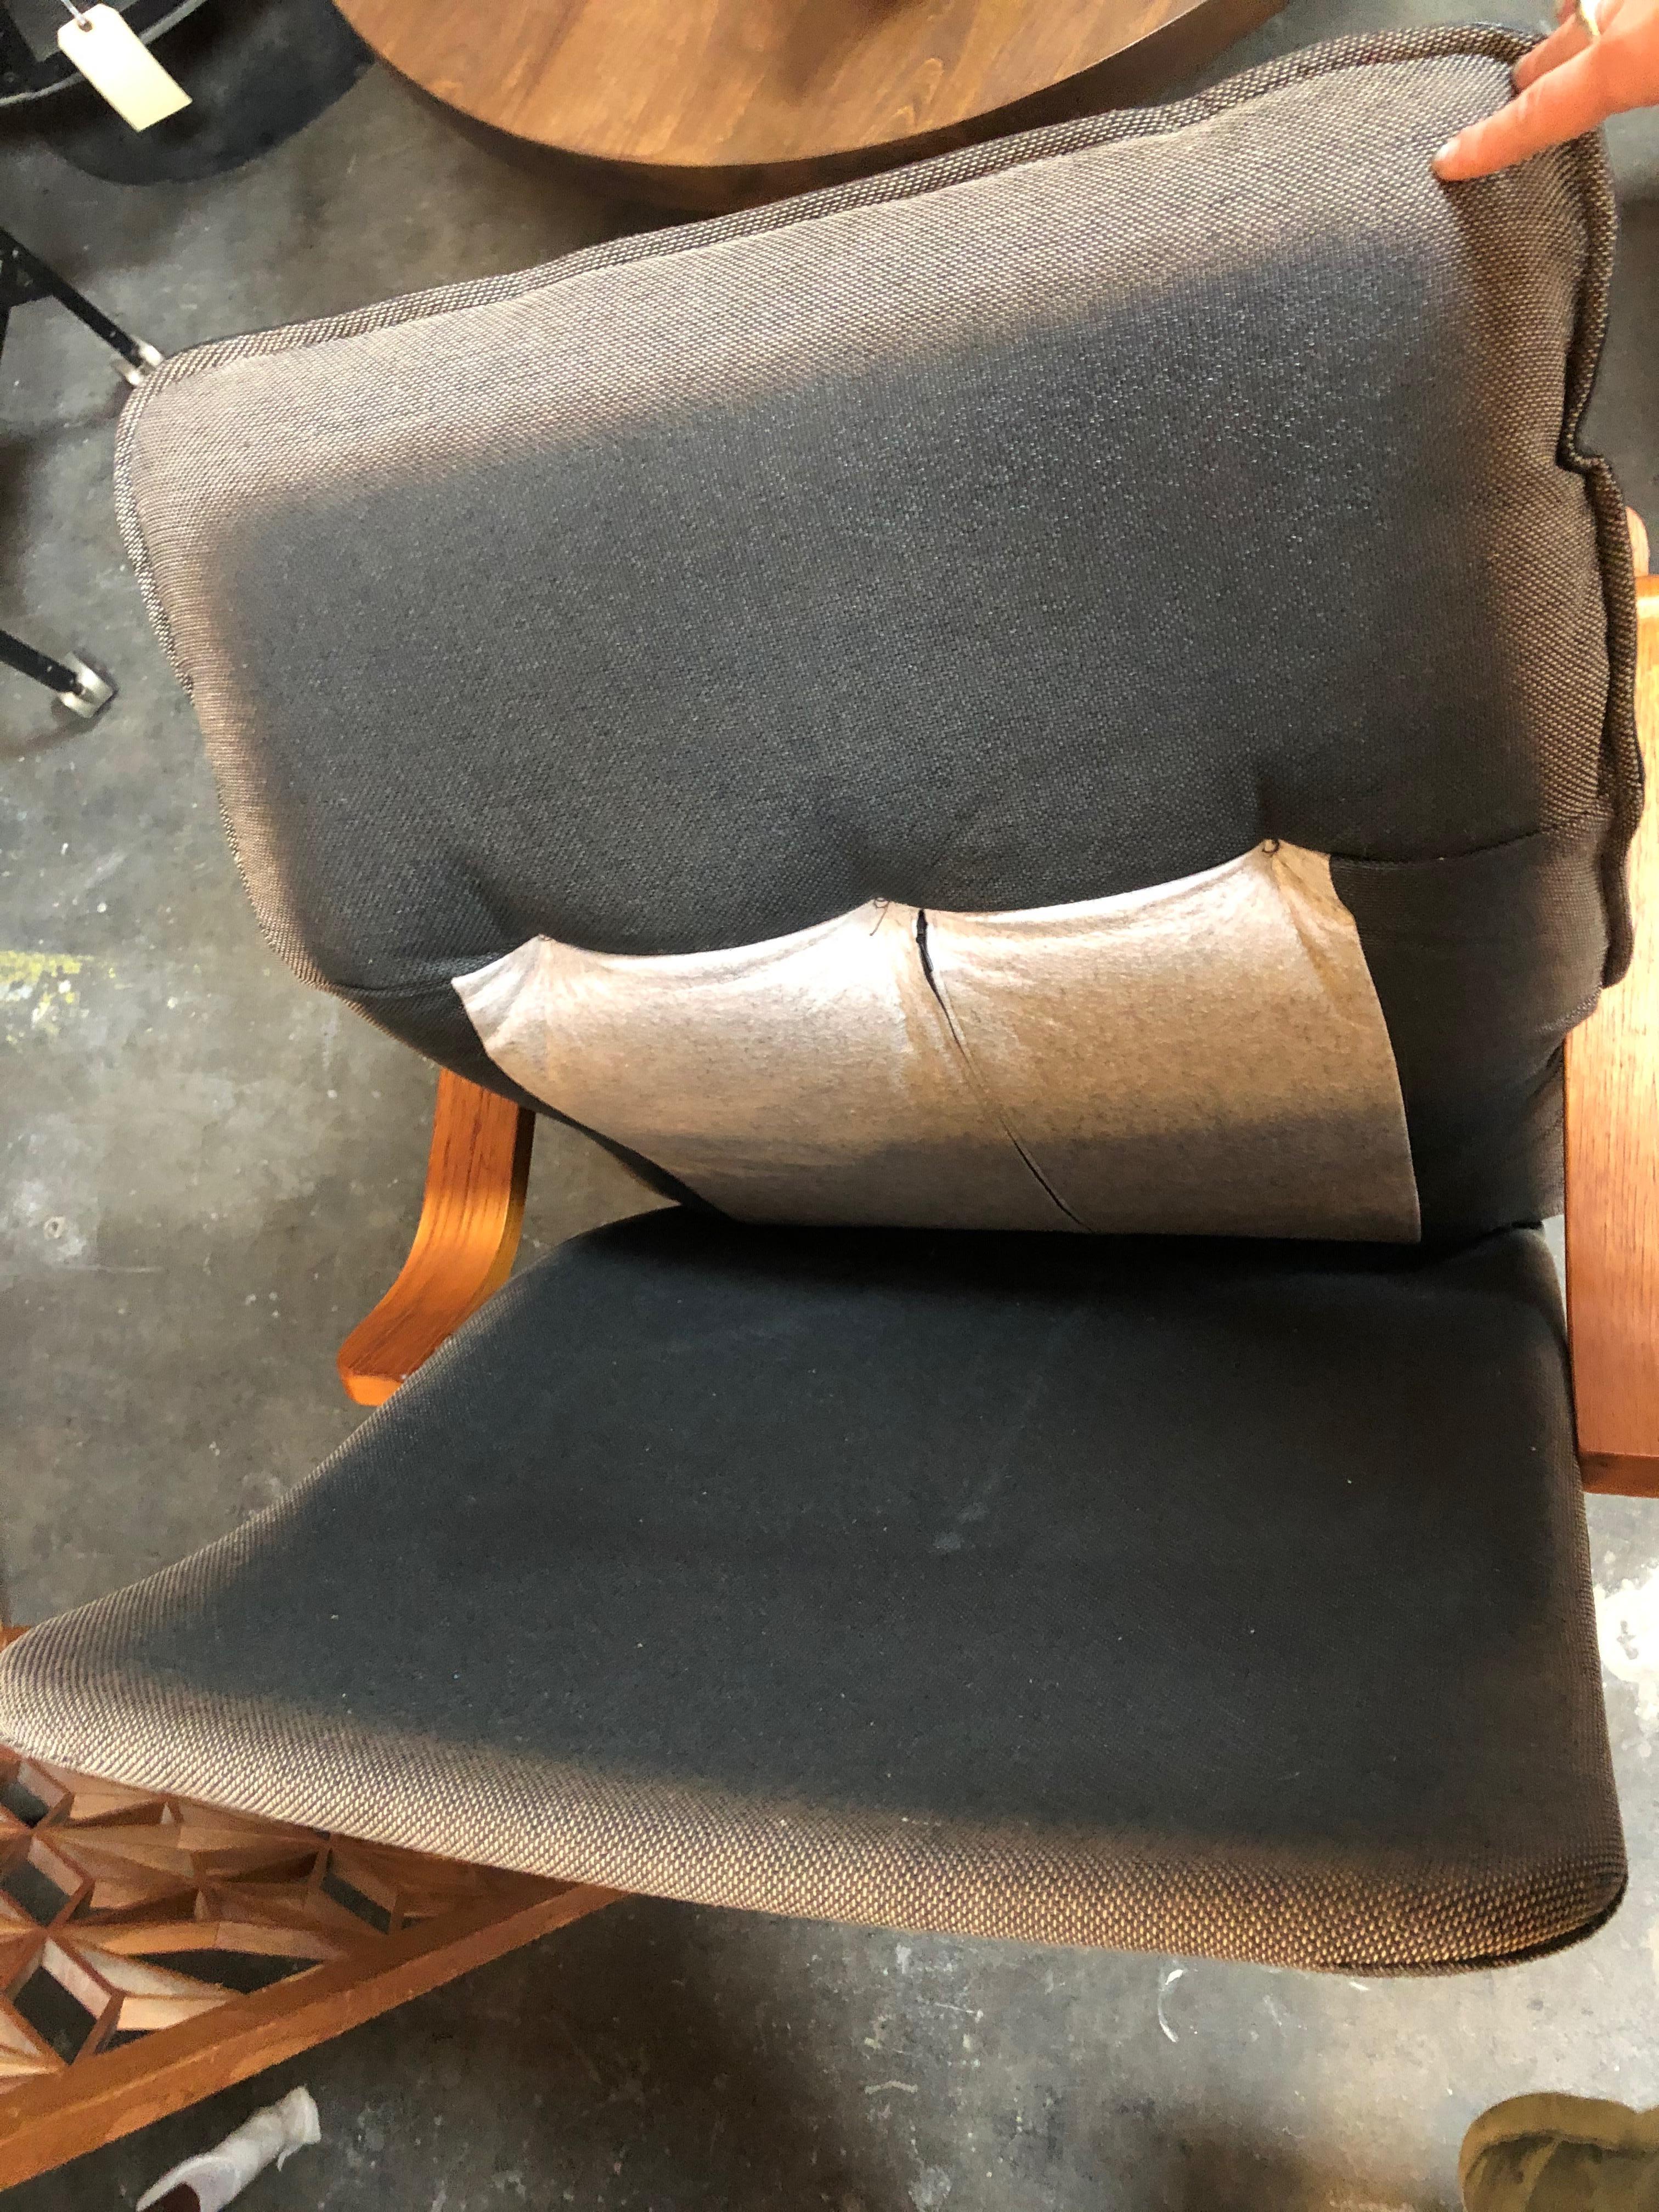 kebe denmark leather chair